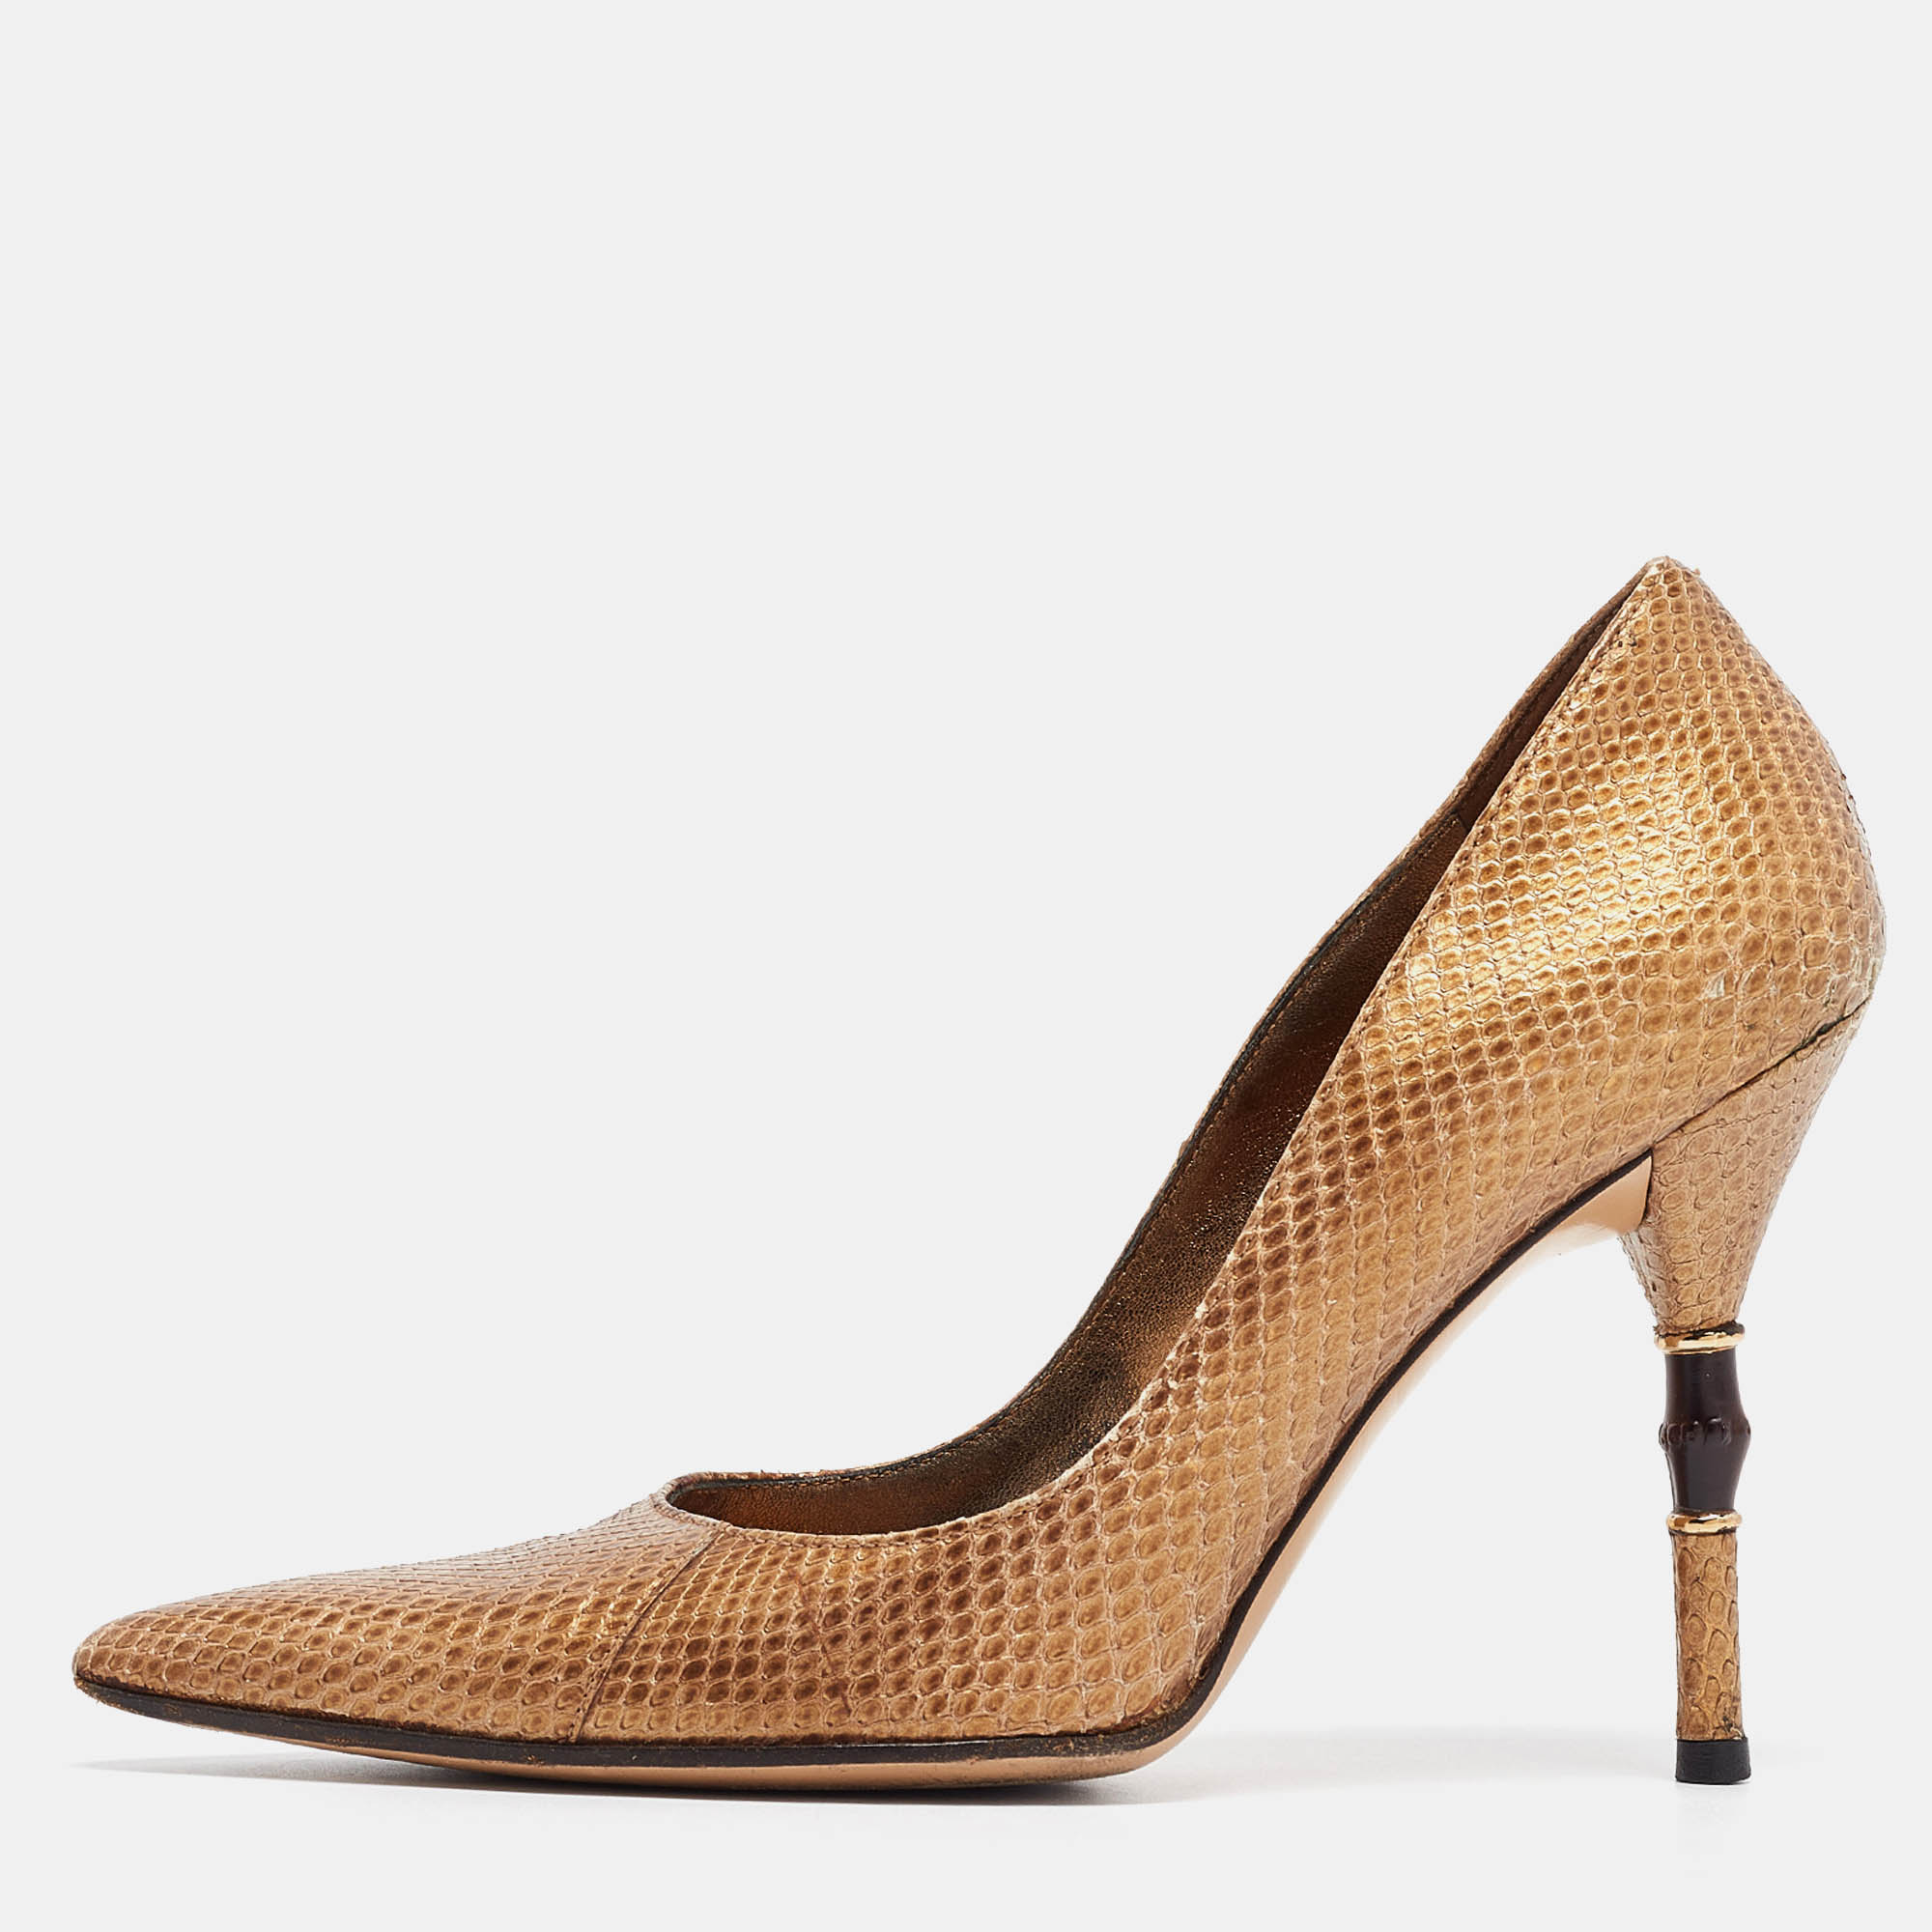 Gucci metallic gold snakeskin bamboo heel pumps size 36